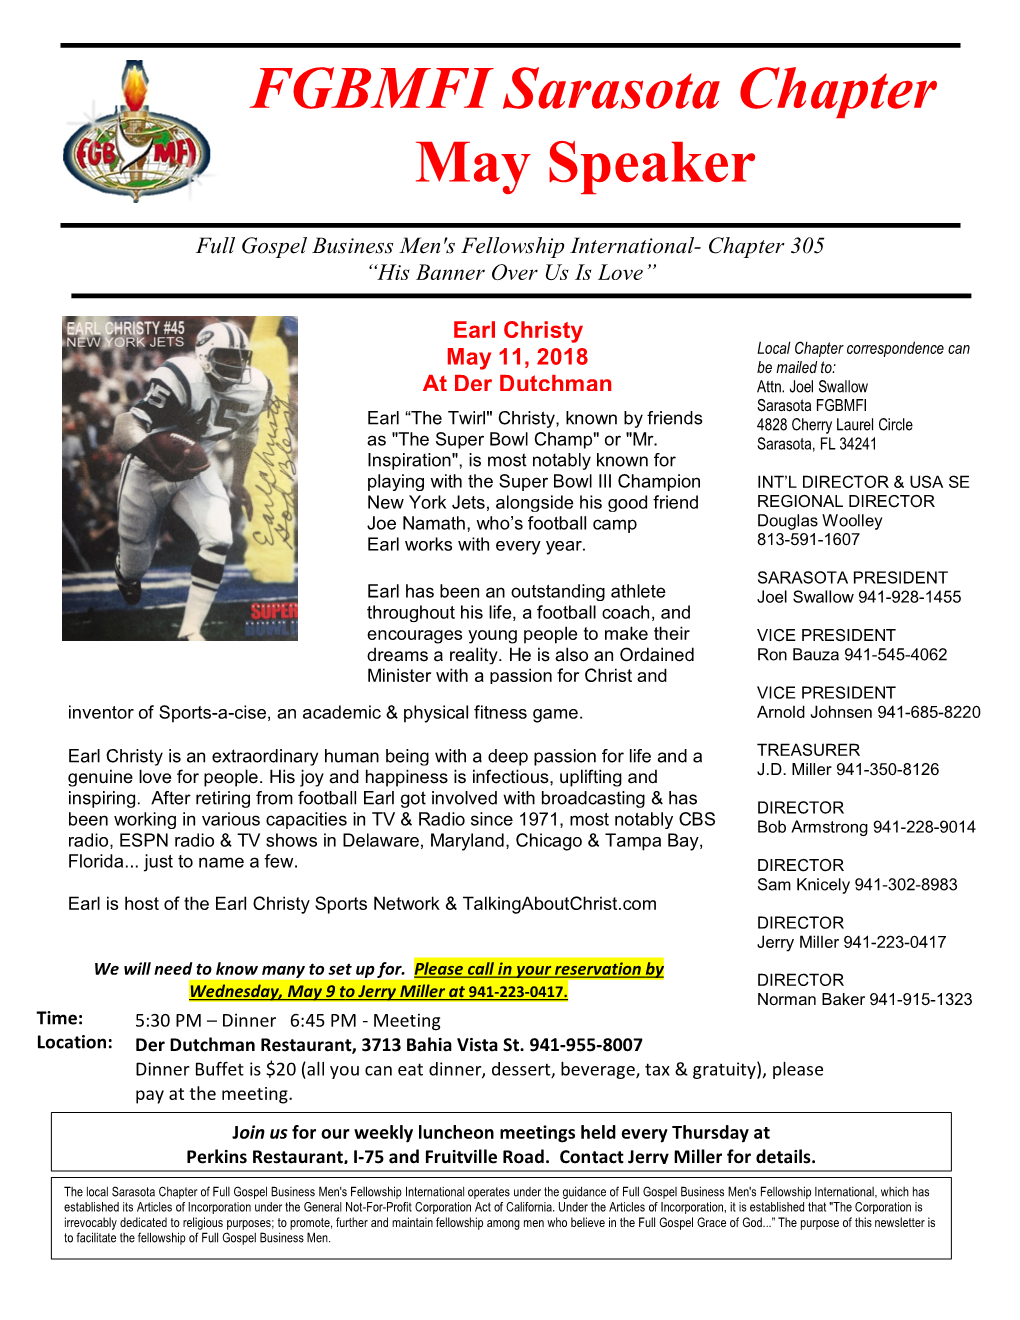 FGBMFI Sarasota Chapter May Speaker